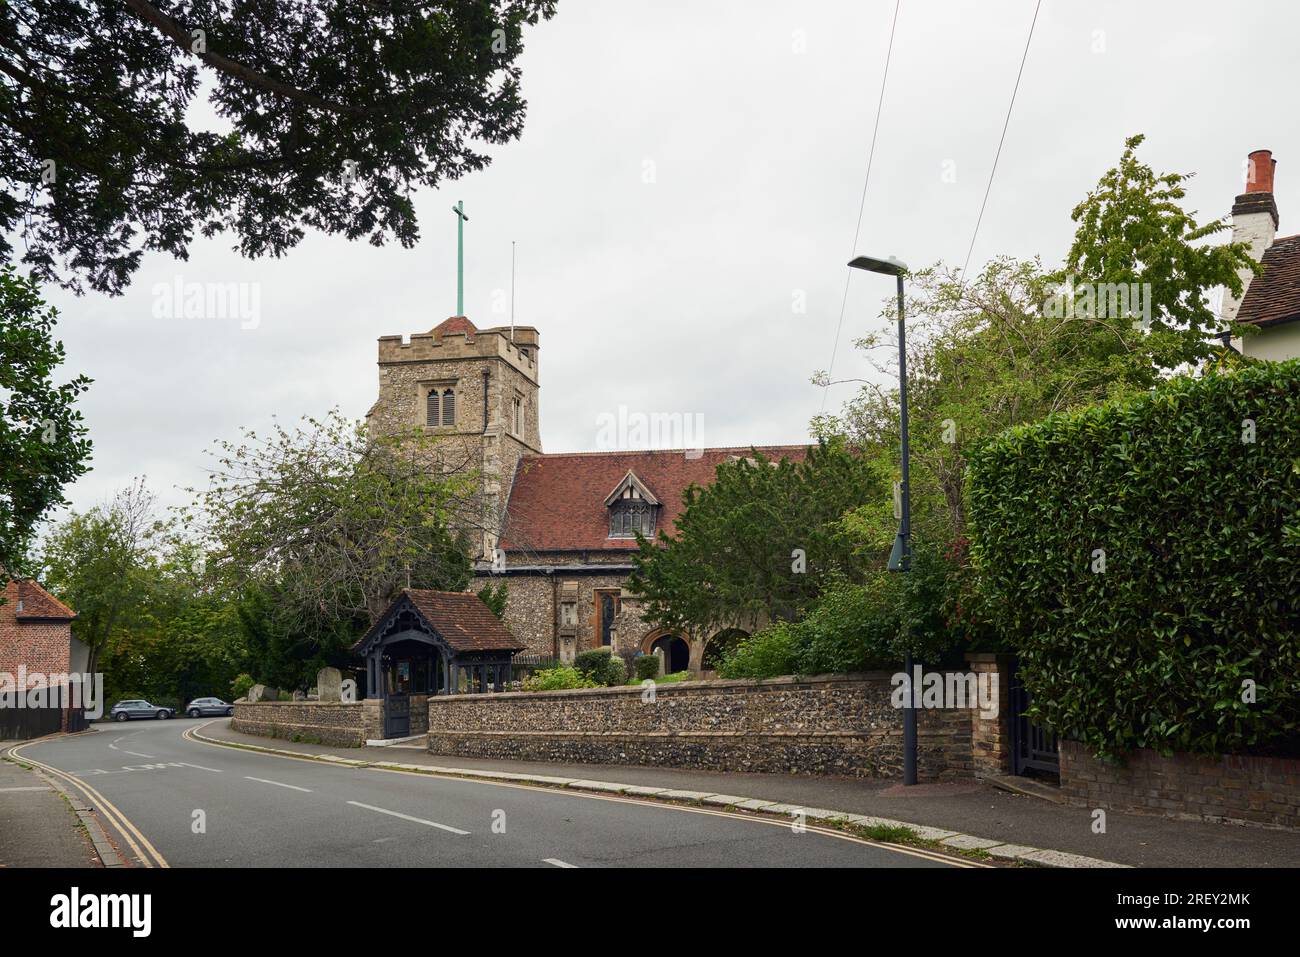 The historic church of St John the Baptist on Church Lane, Pinner, Middlesex, Greater London UK Stock Photo